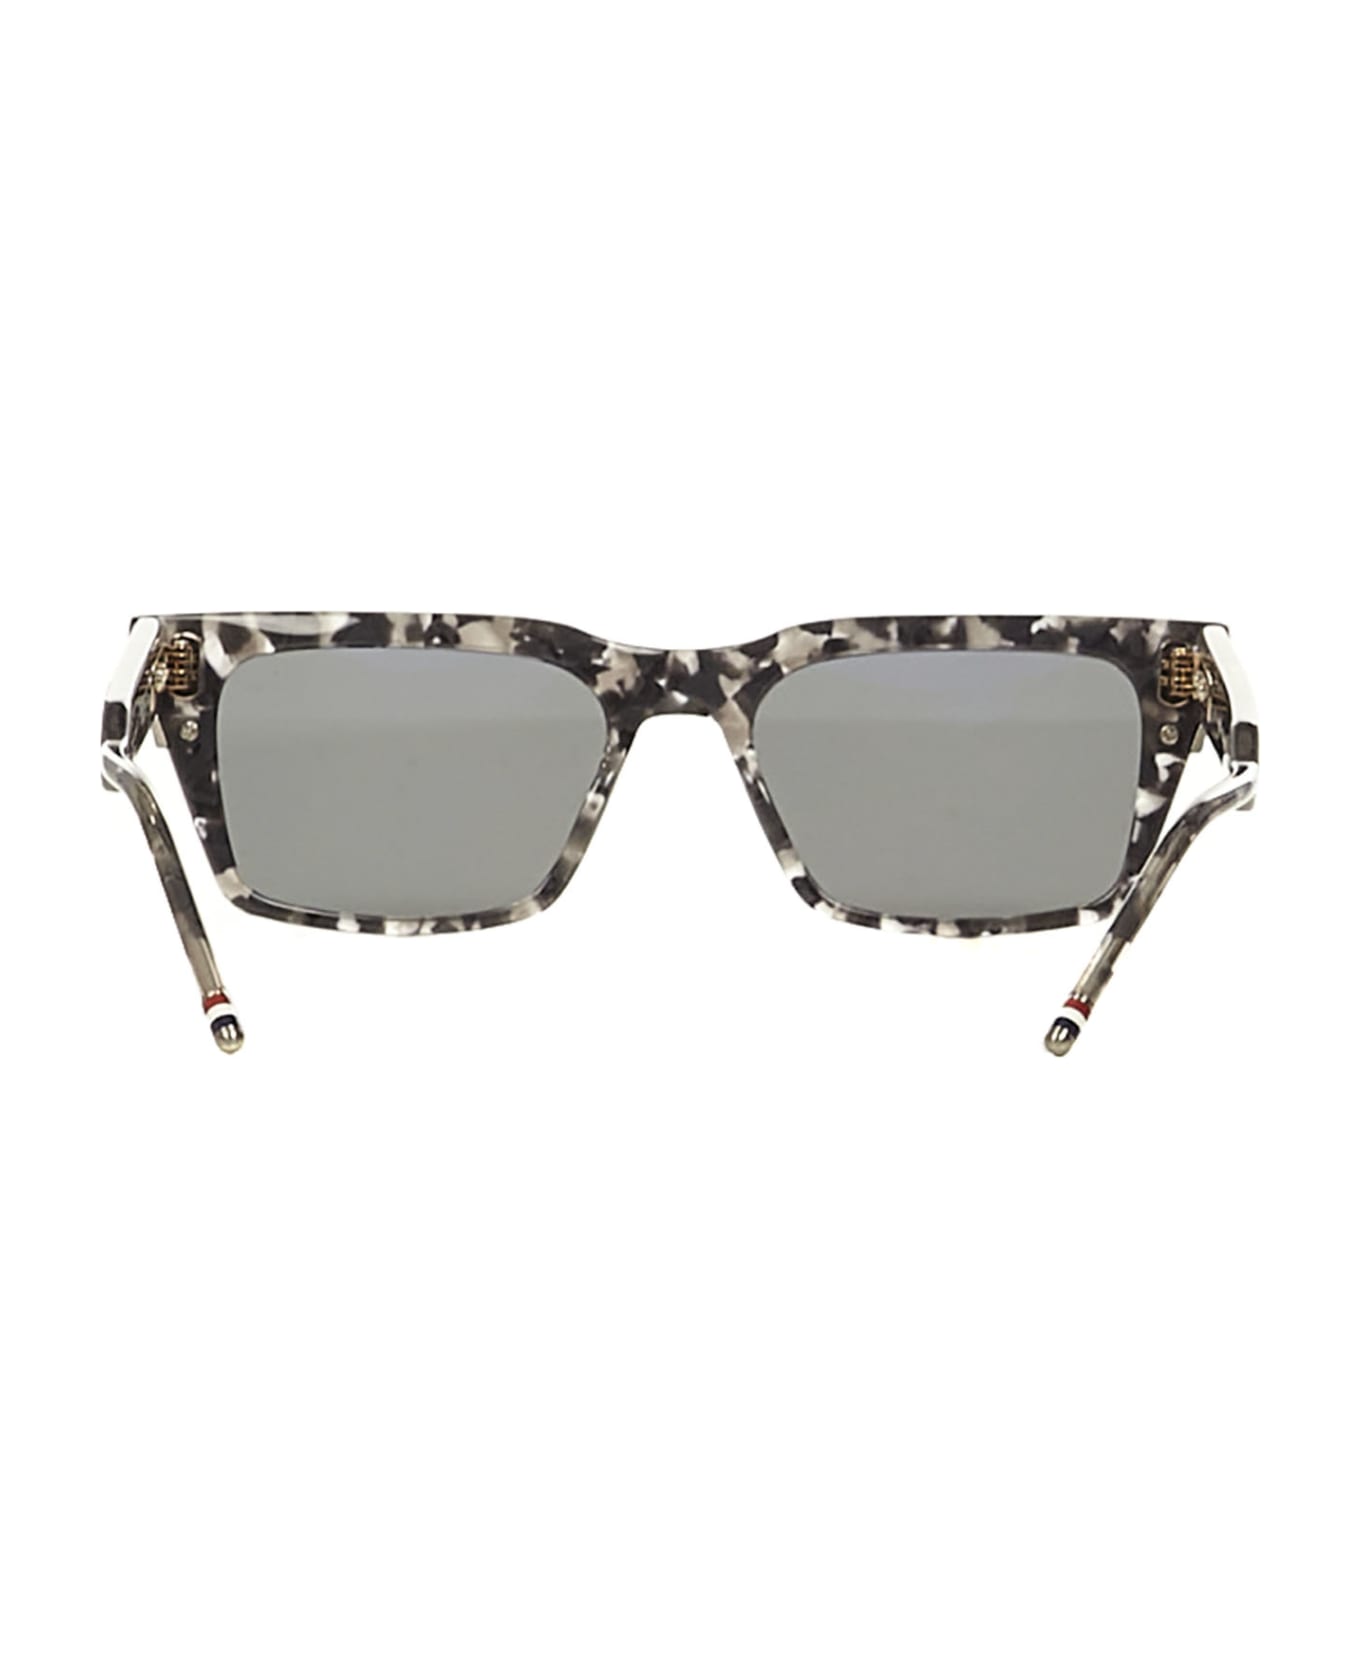 Thom Browne Sunglasses Tb714 Sunglasses - Grey サングラス